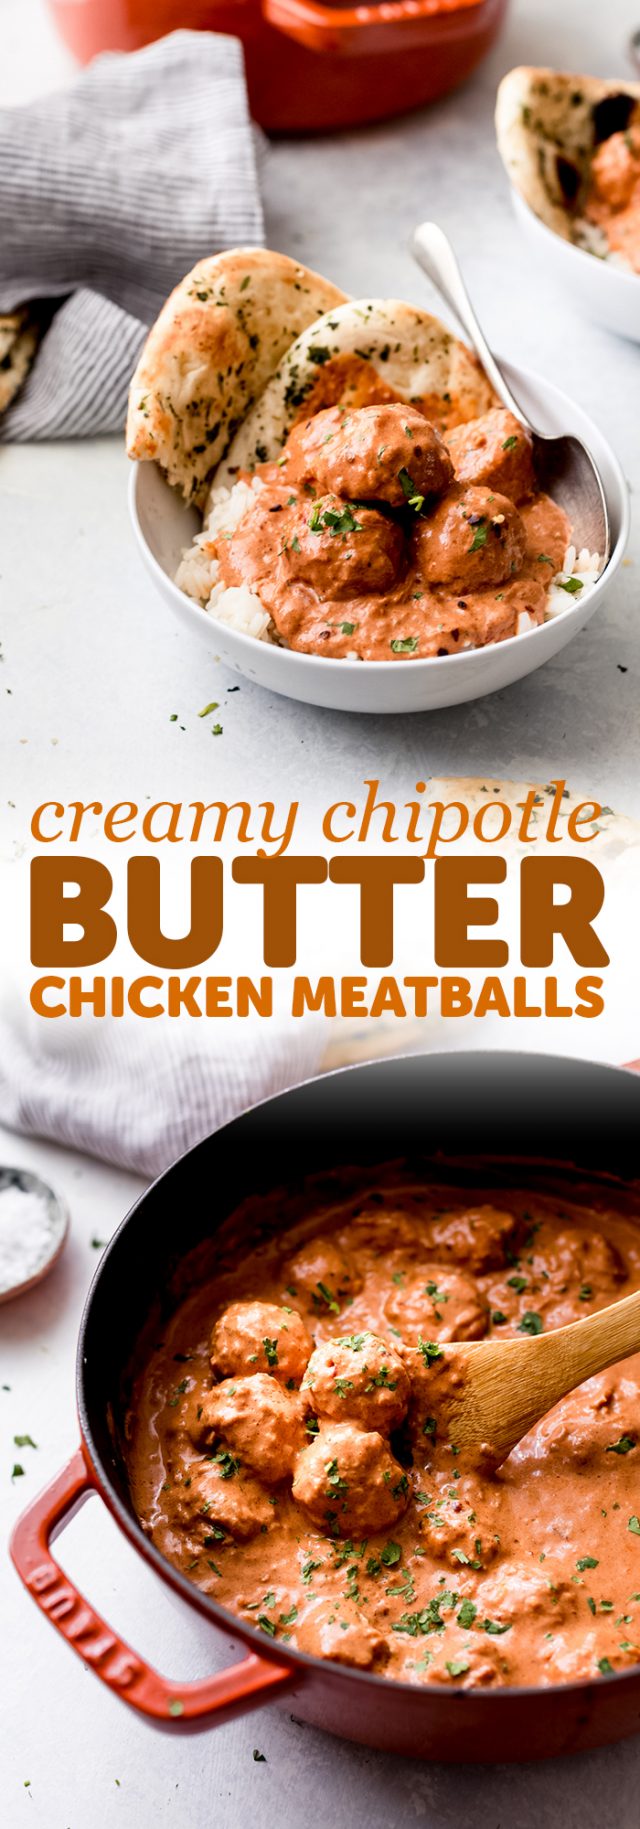 Creamy Chipotle Butter Chicken Meatballs Recipe | Little Spice Jar